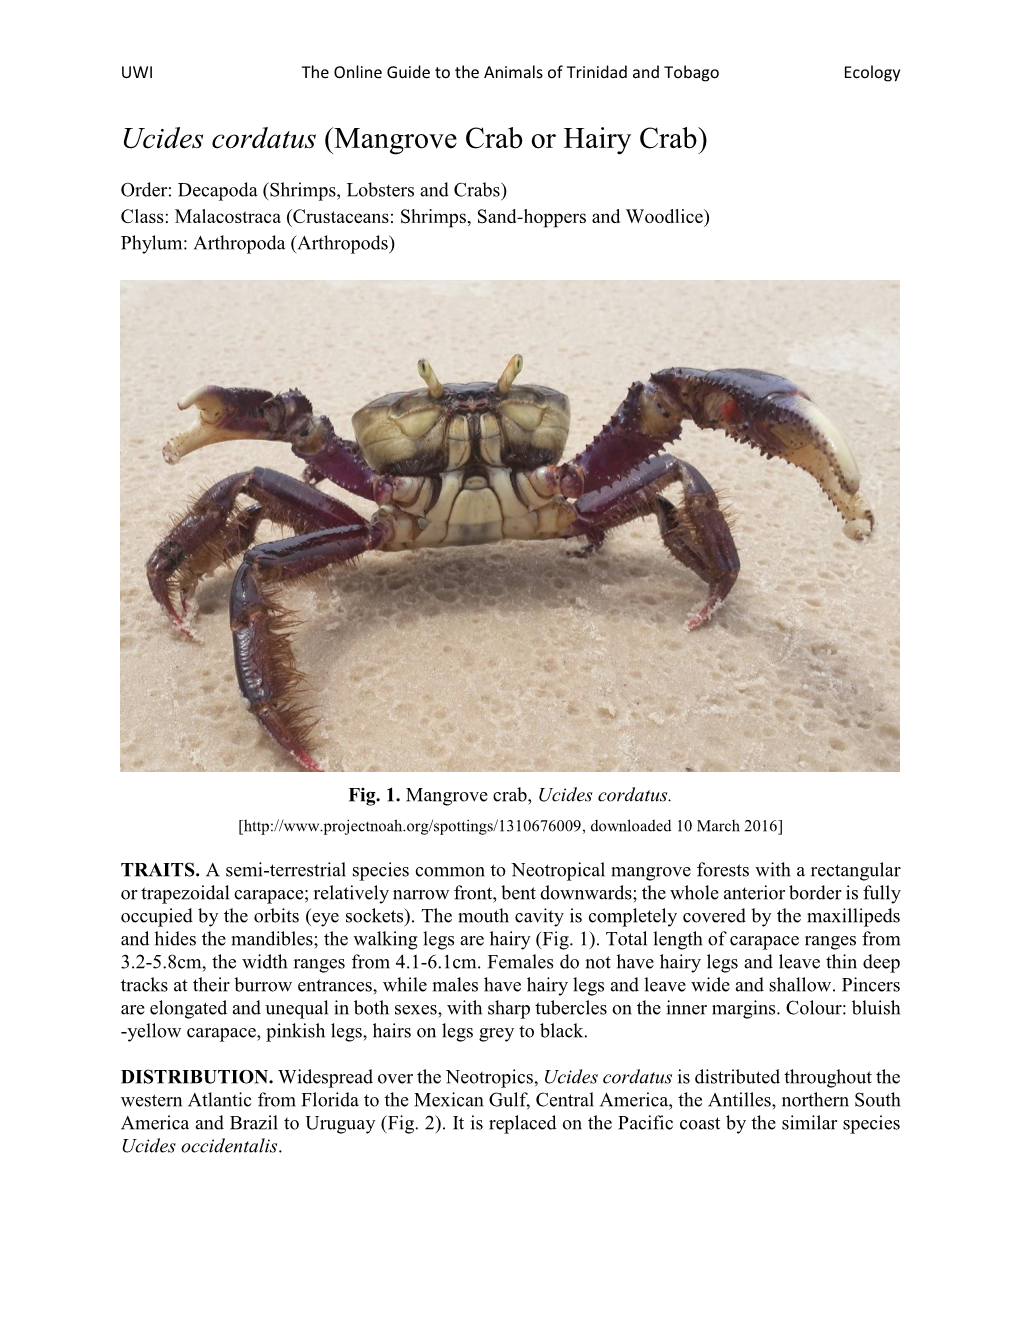 Ucides Cordatus (Mangrove Crab Or Hairy Crab)